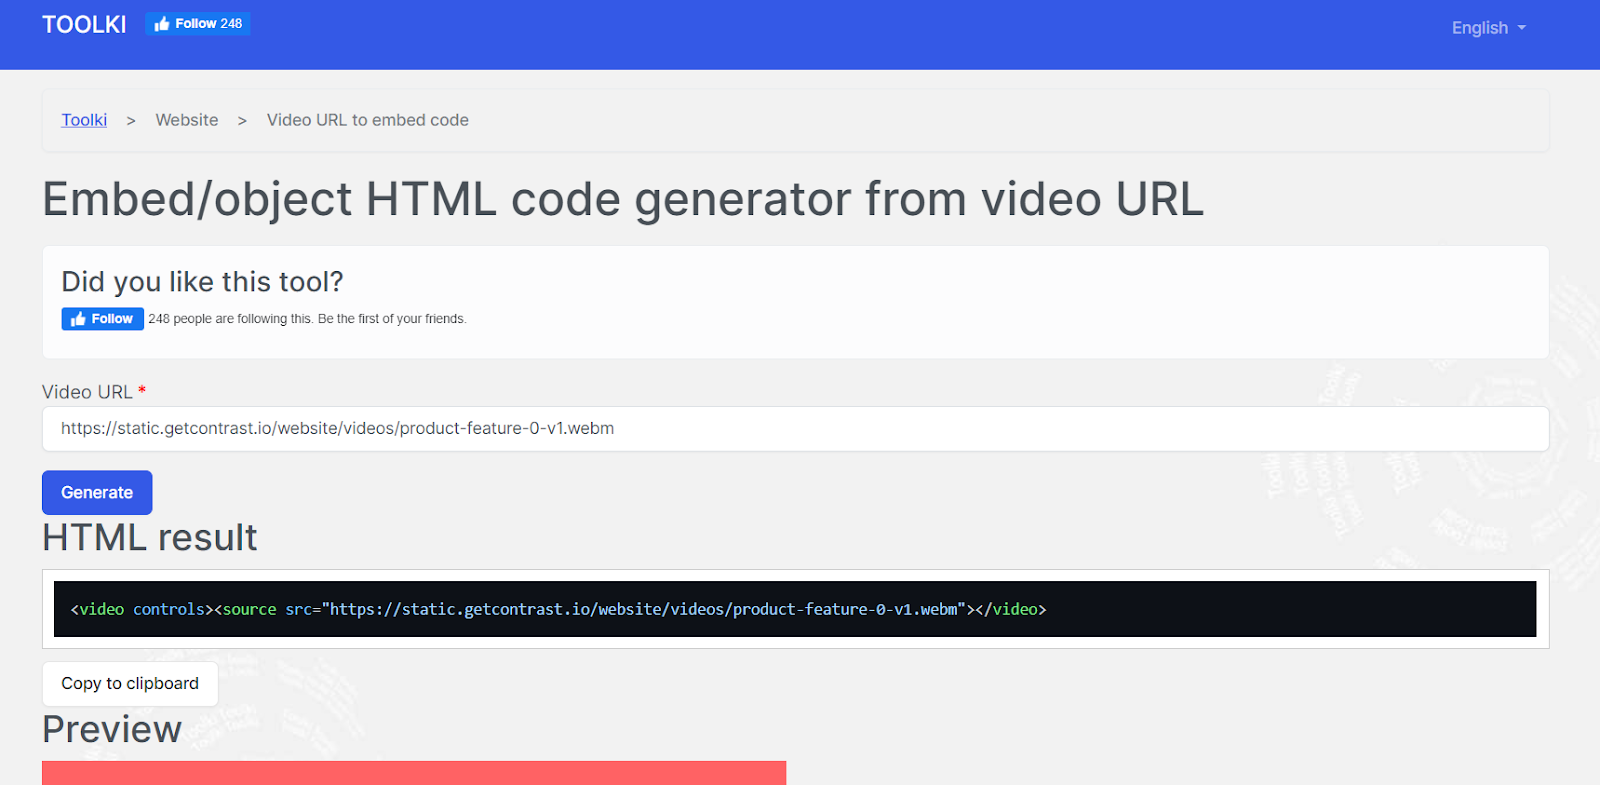 Screenshot of Toolki video embed code generator